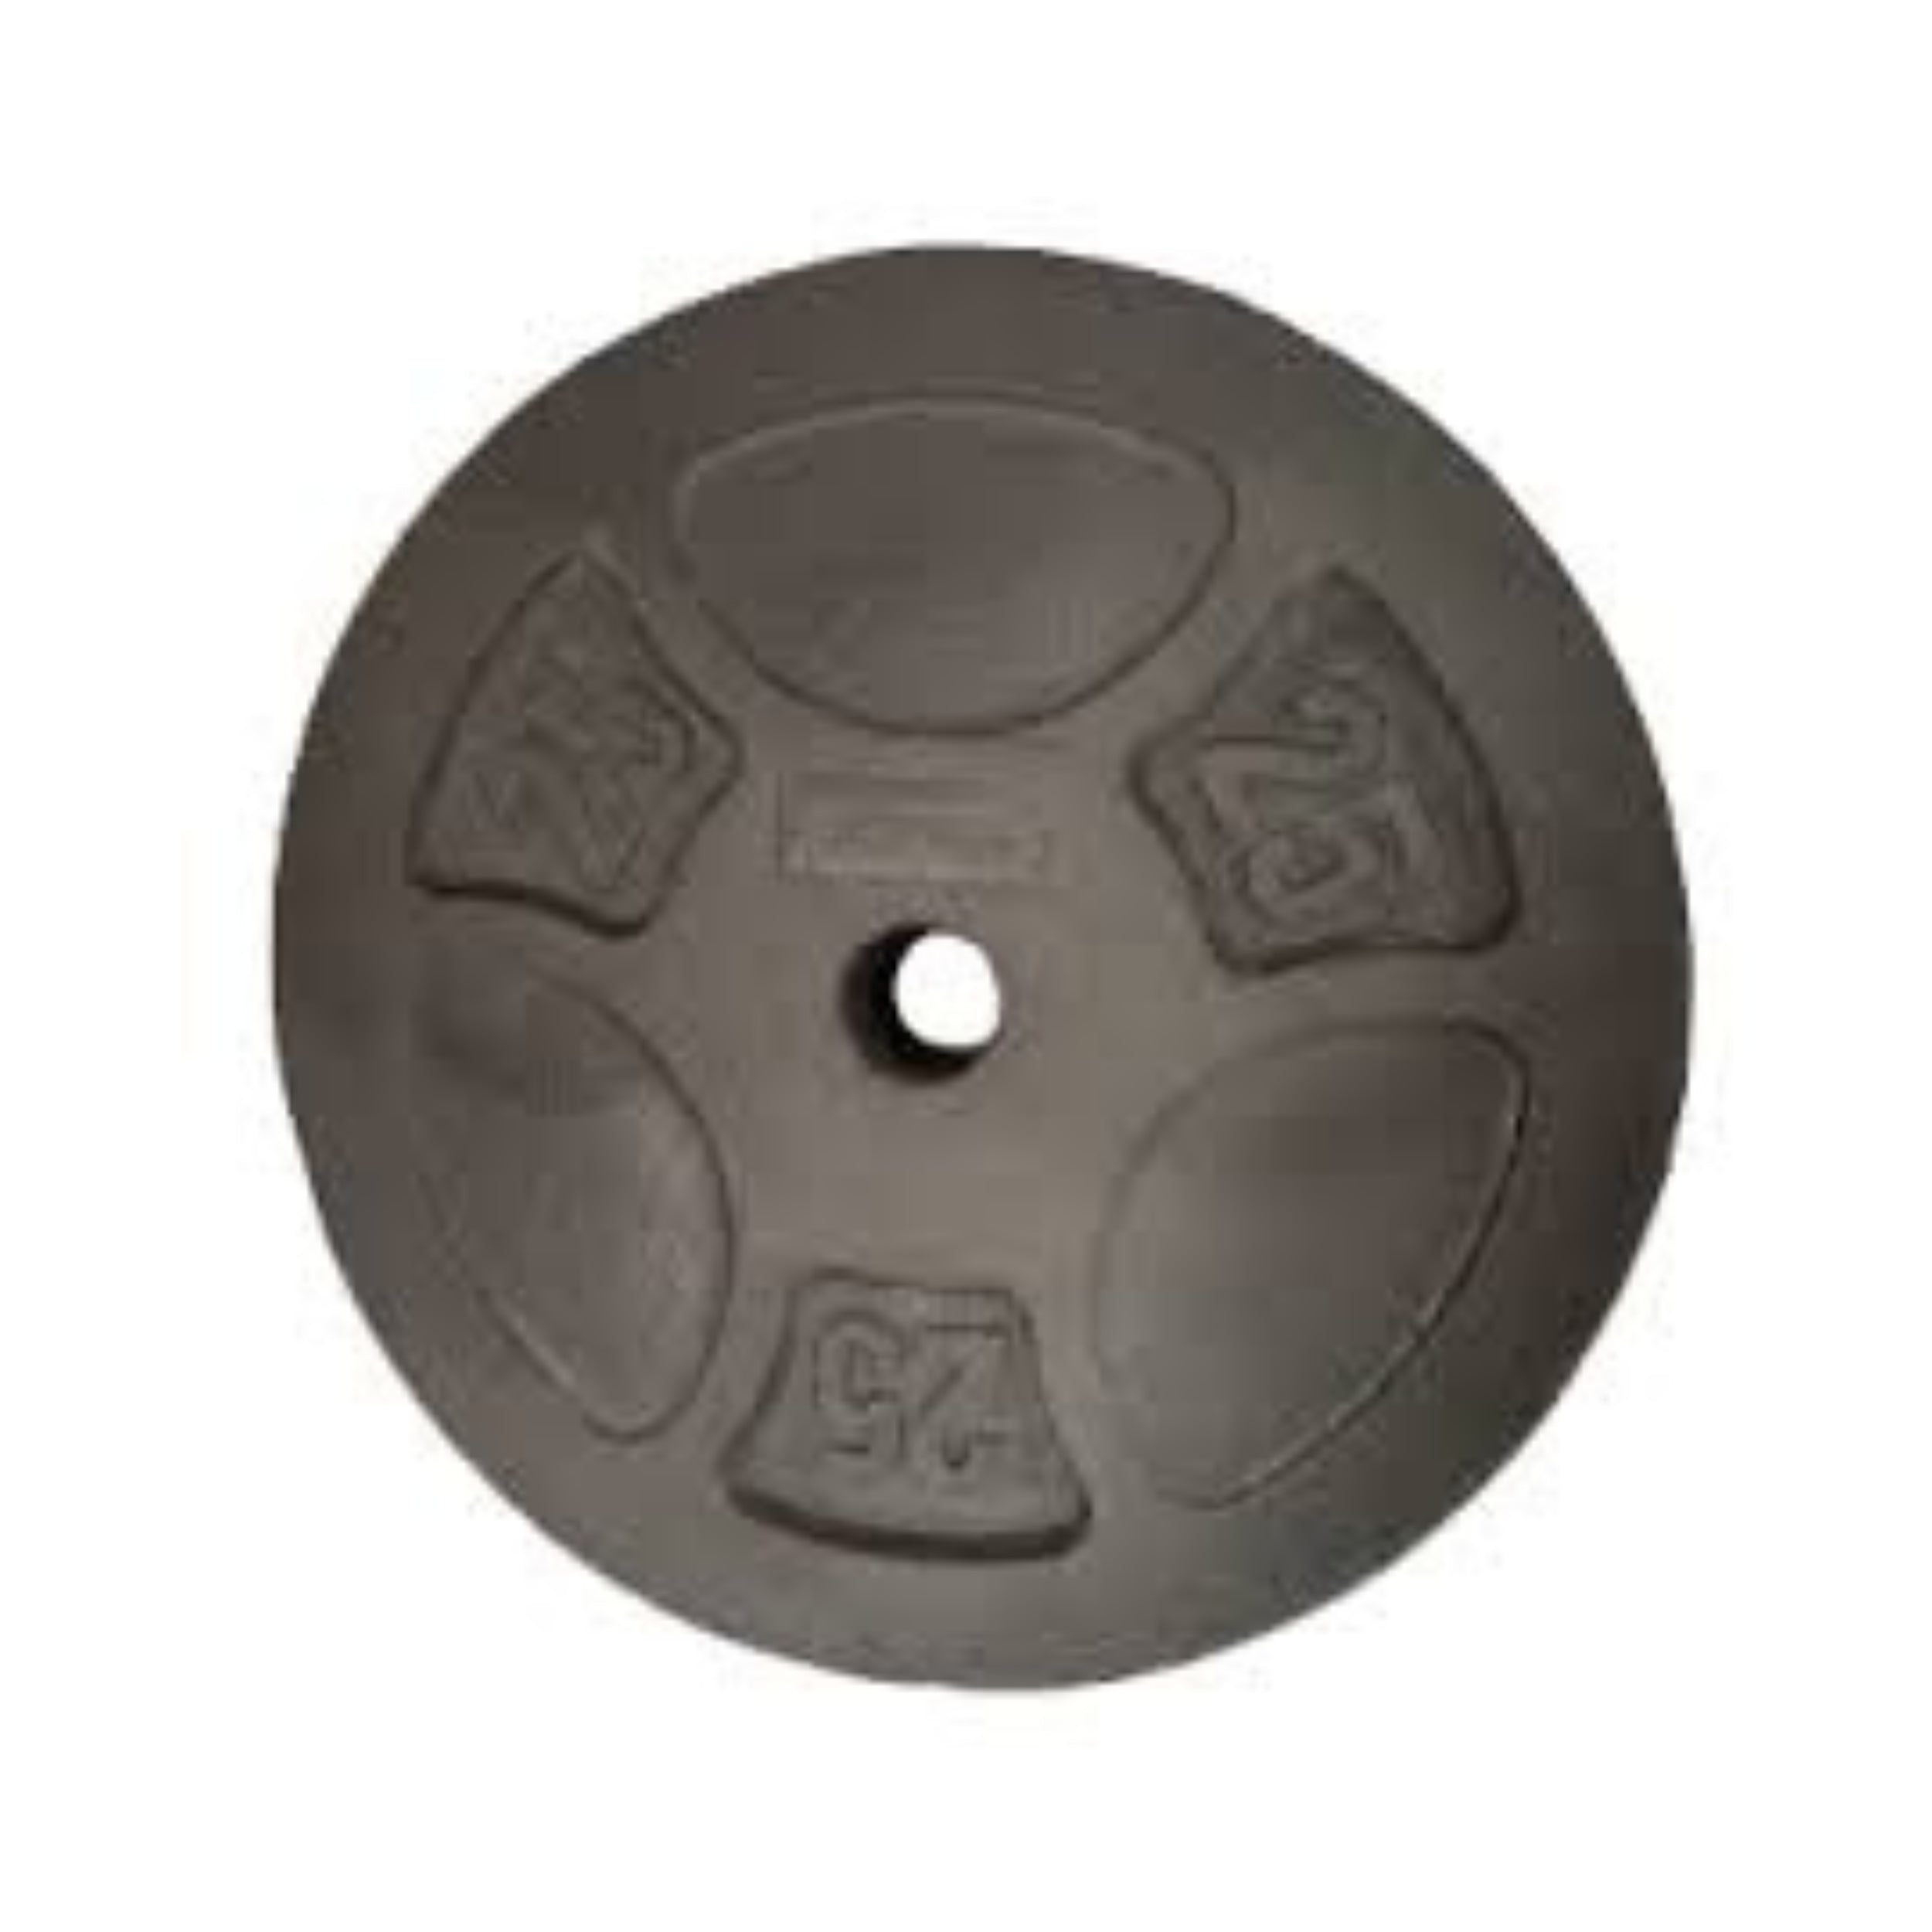 RTFAK rubber weight plate, 25 kg look